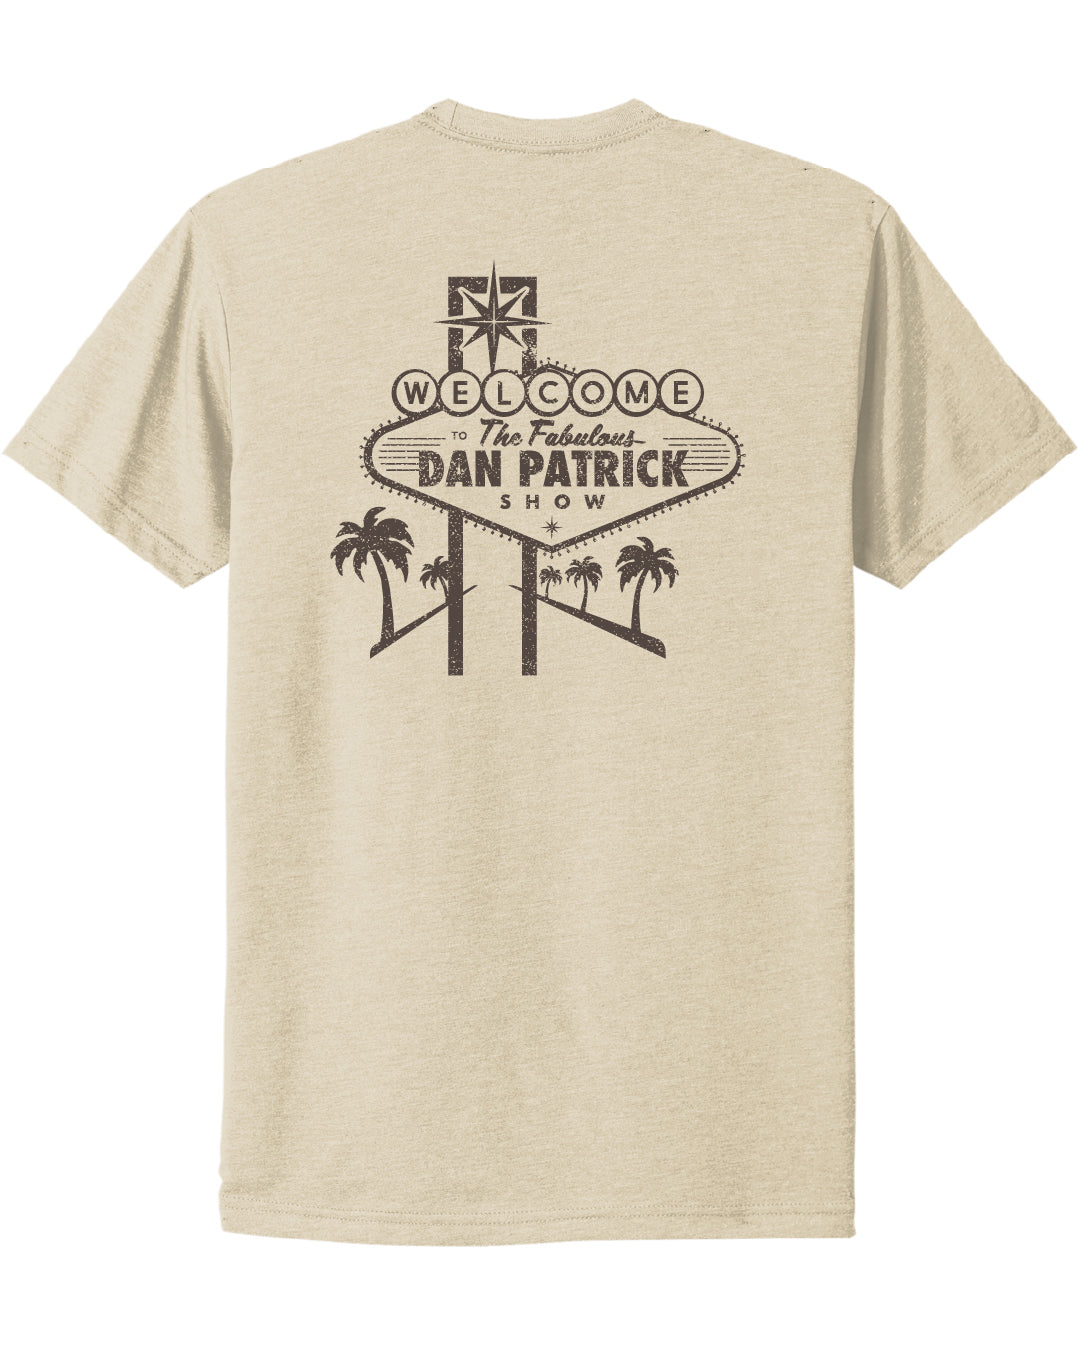 The Fabulous Dan Patrick Show T-Shirt